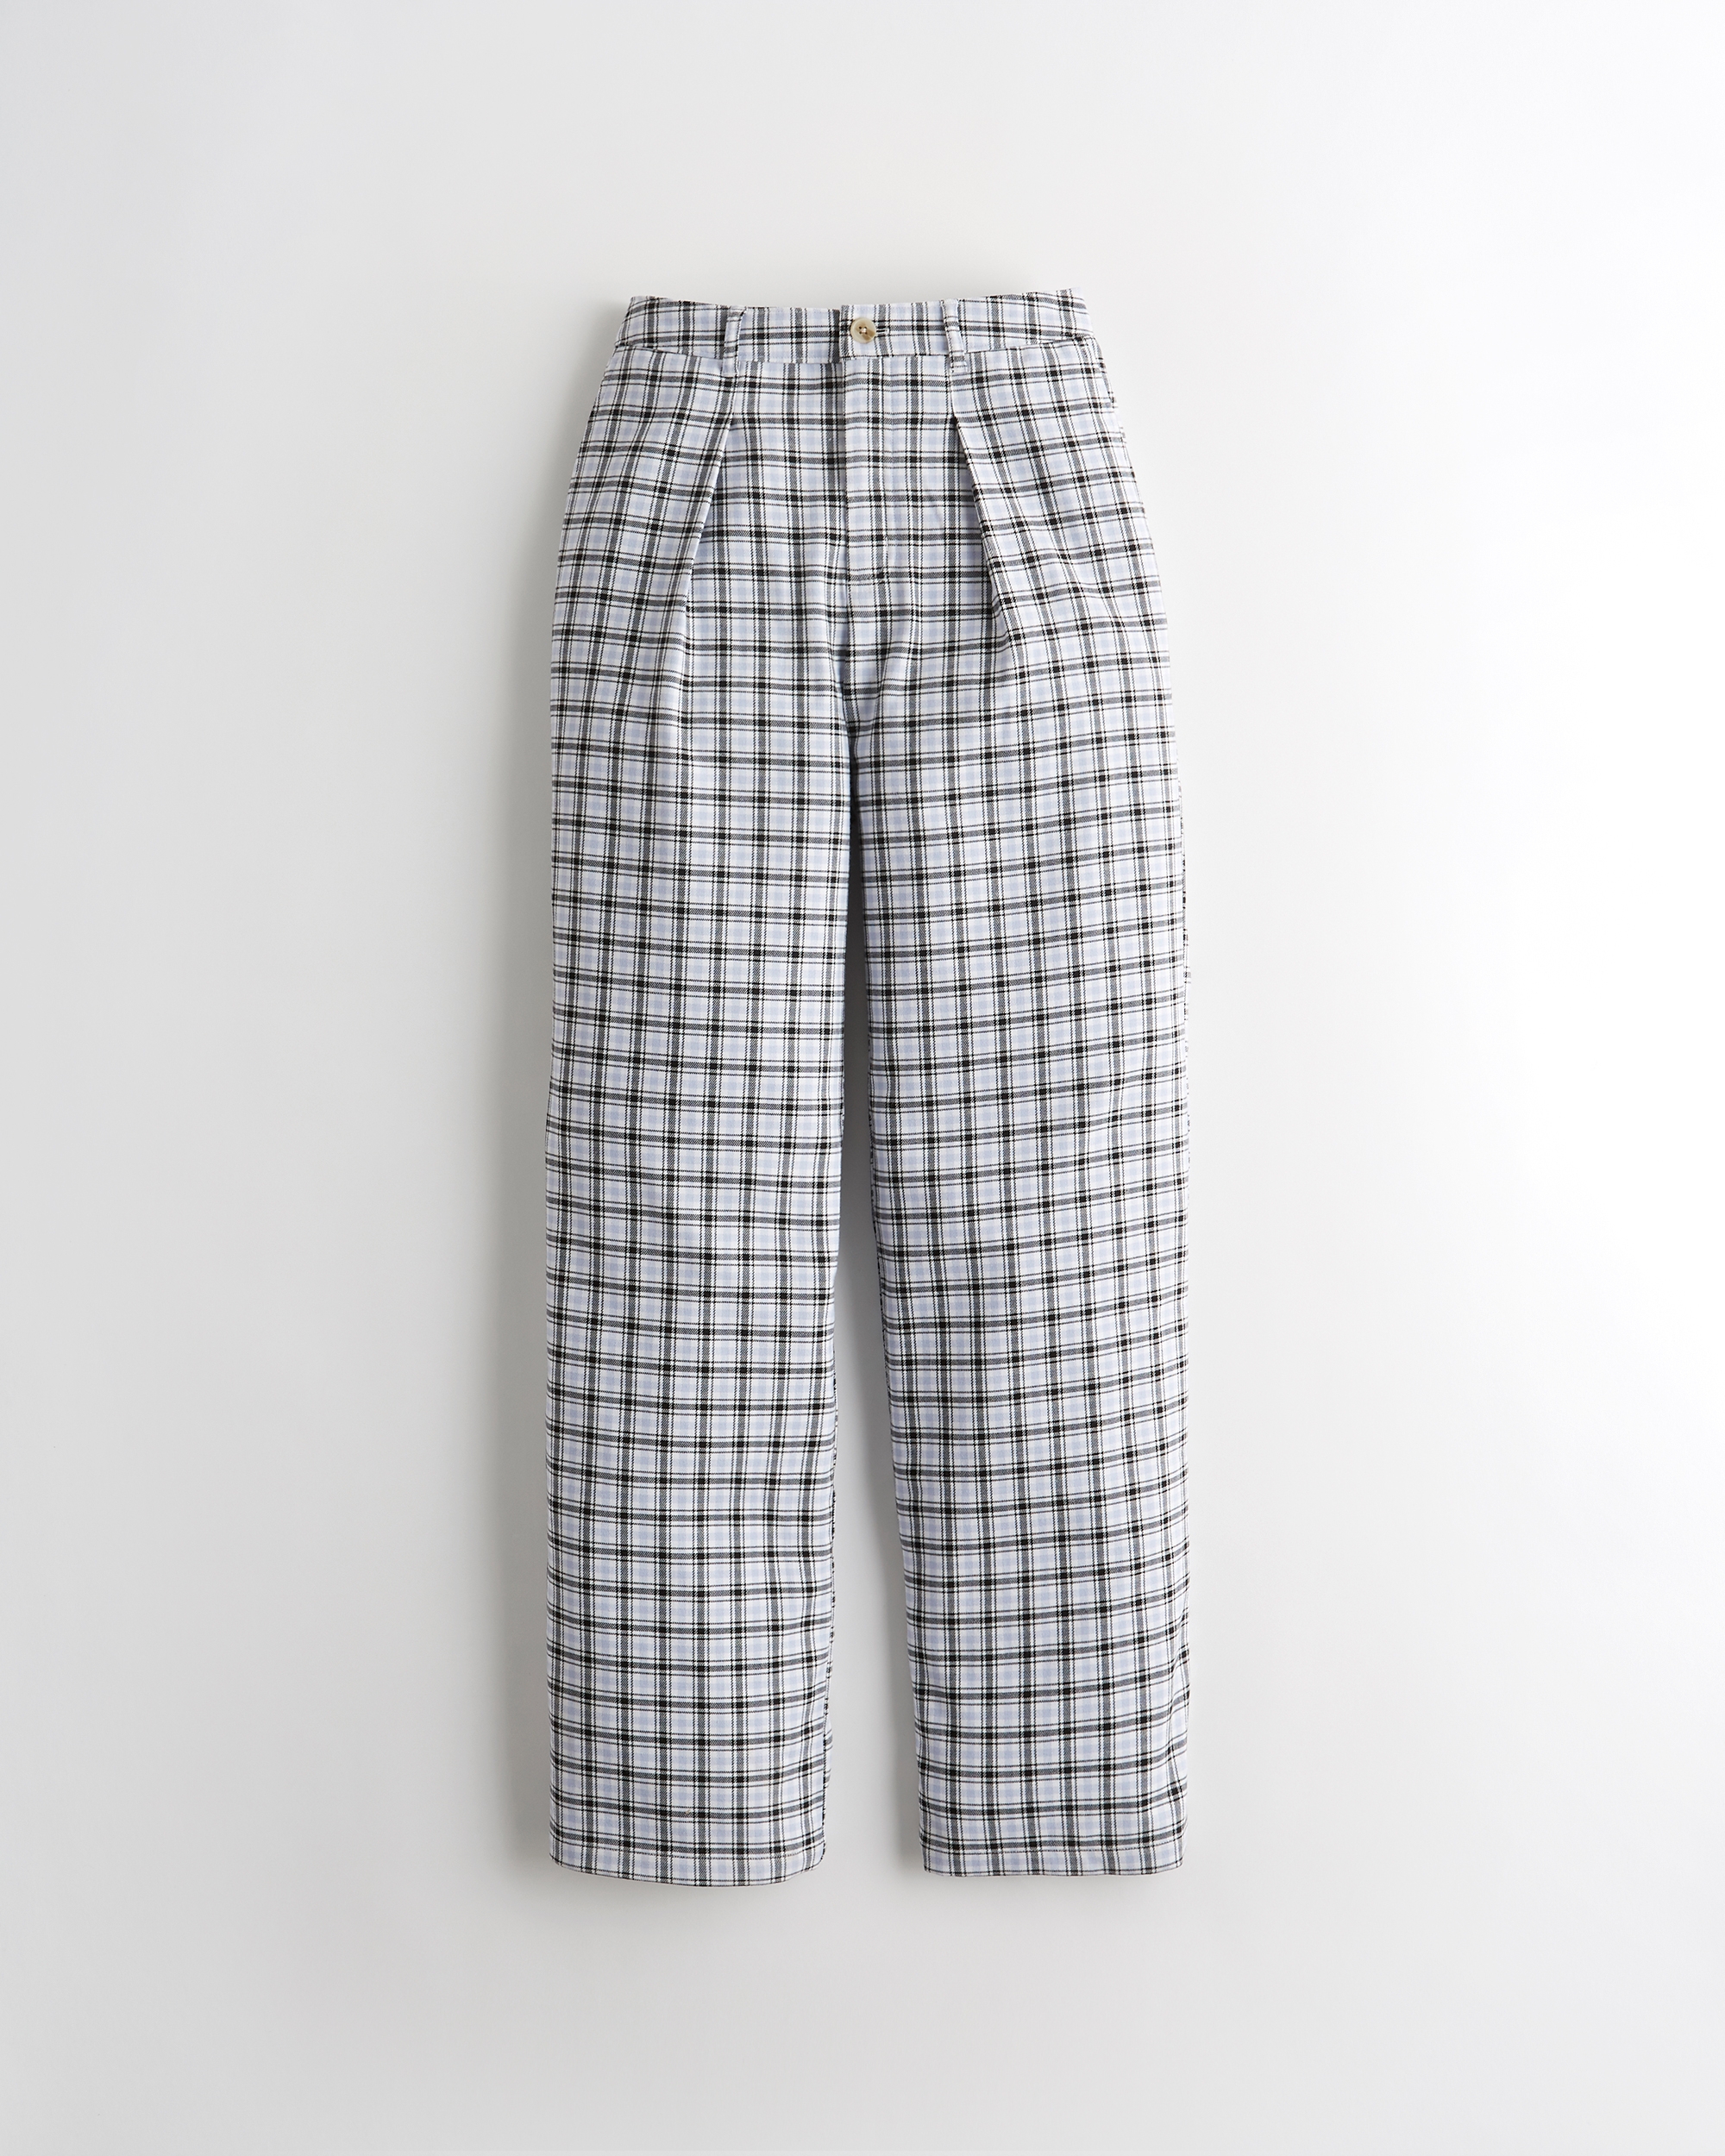 hollister checkered pants